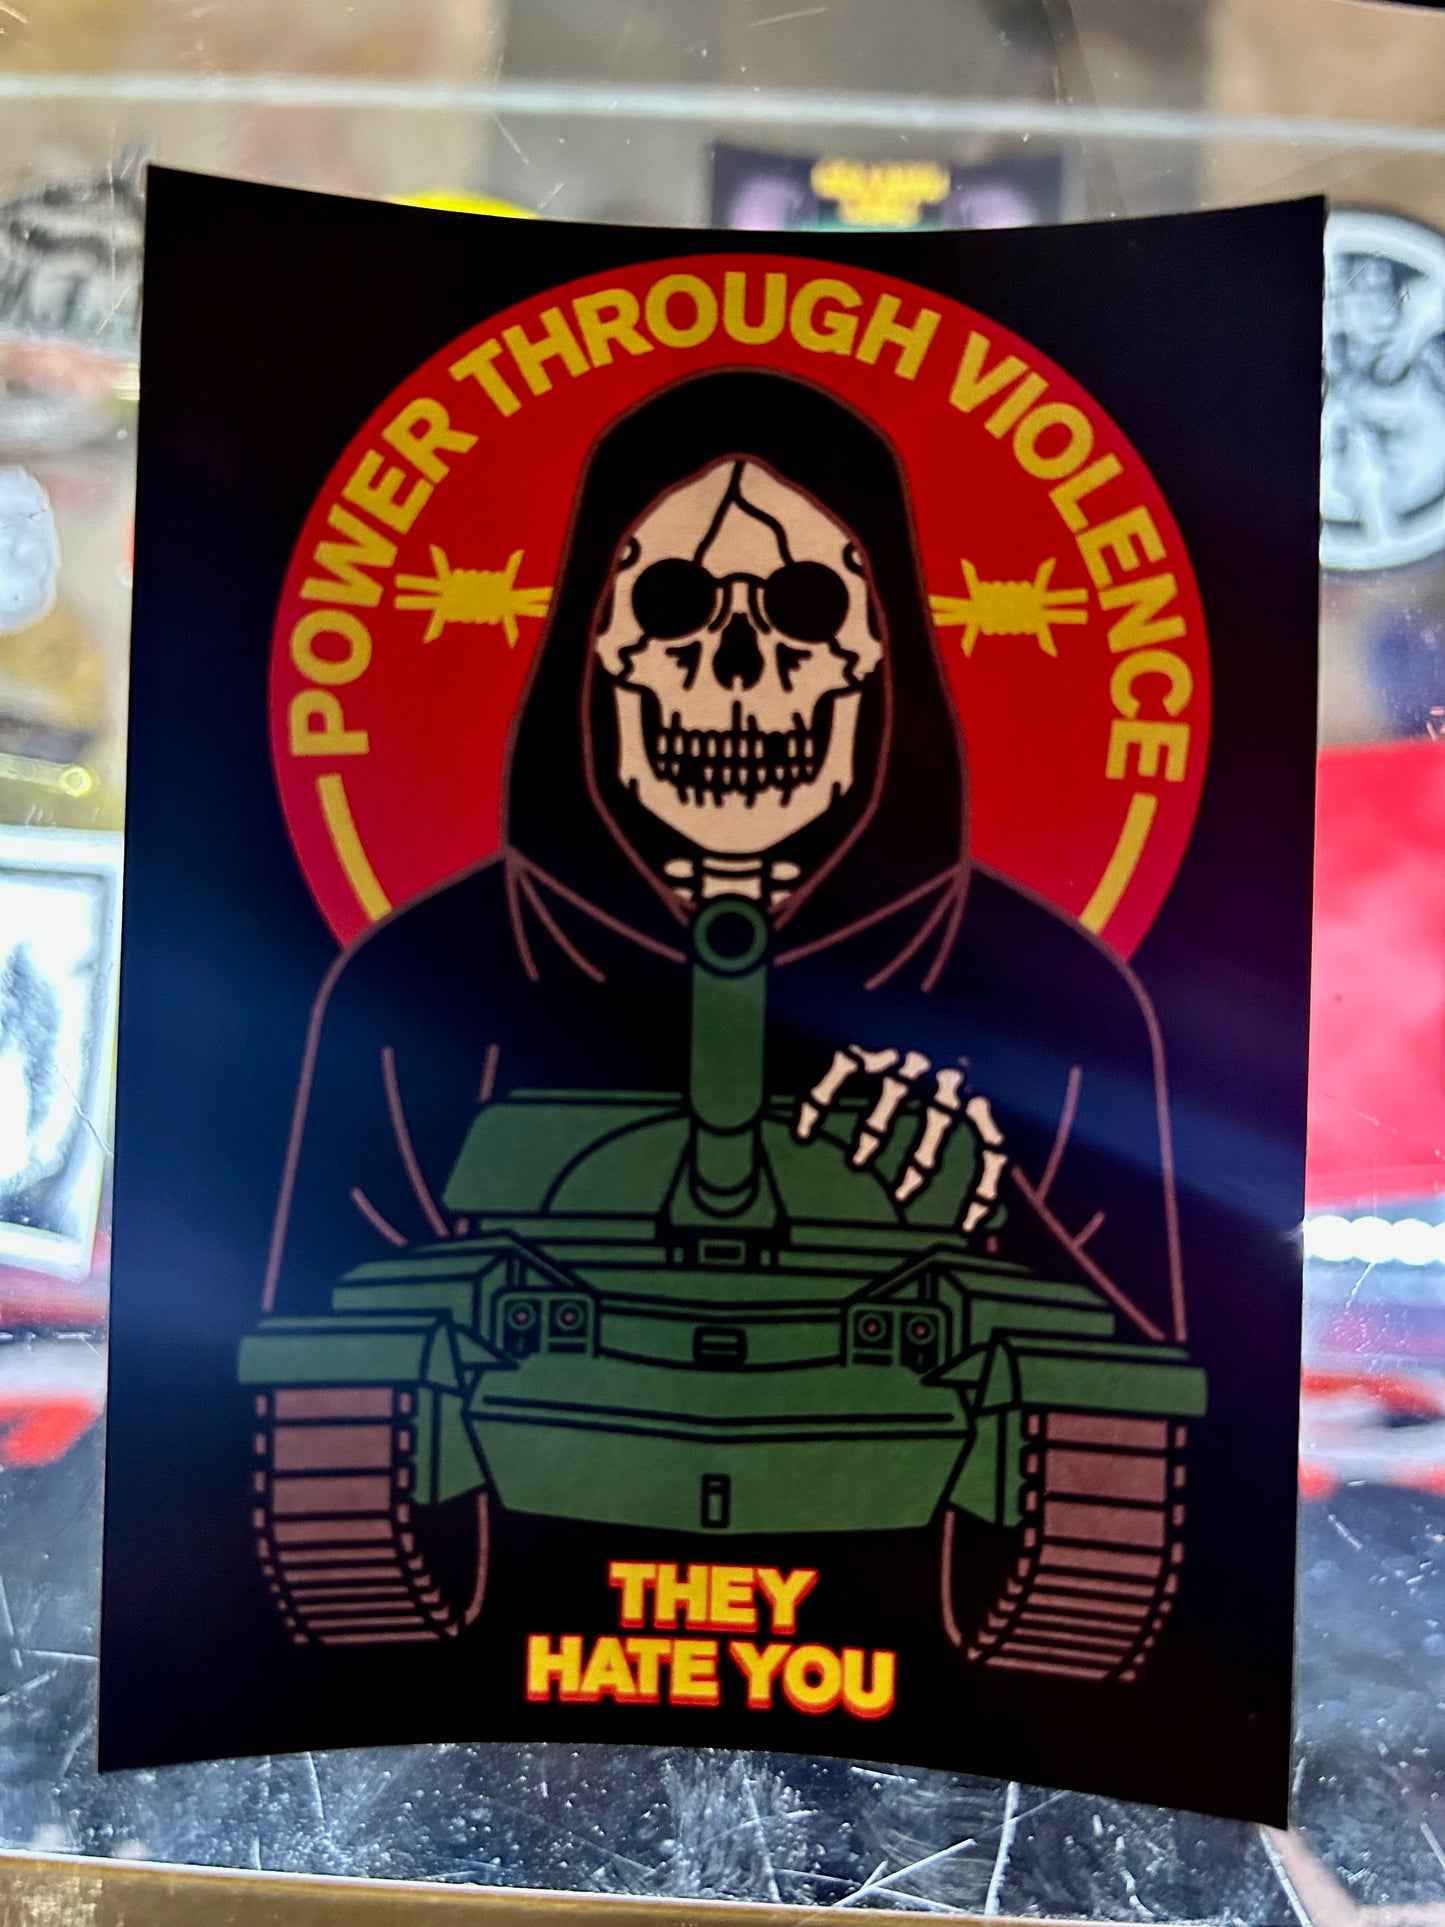 "Power Through Violence" Sticker by Death/Traitors